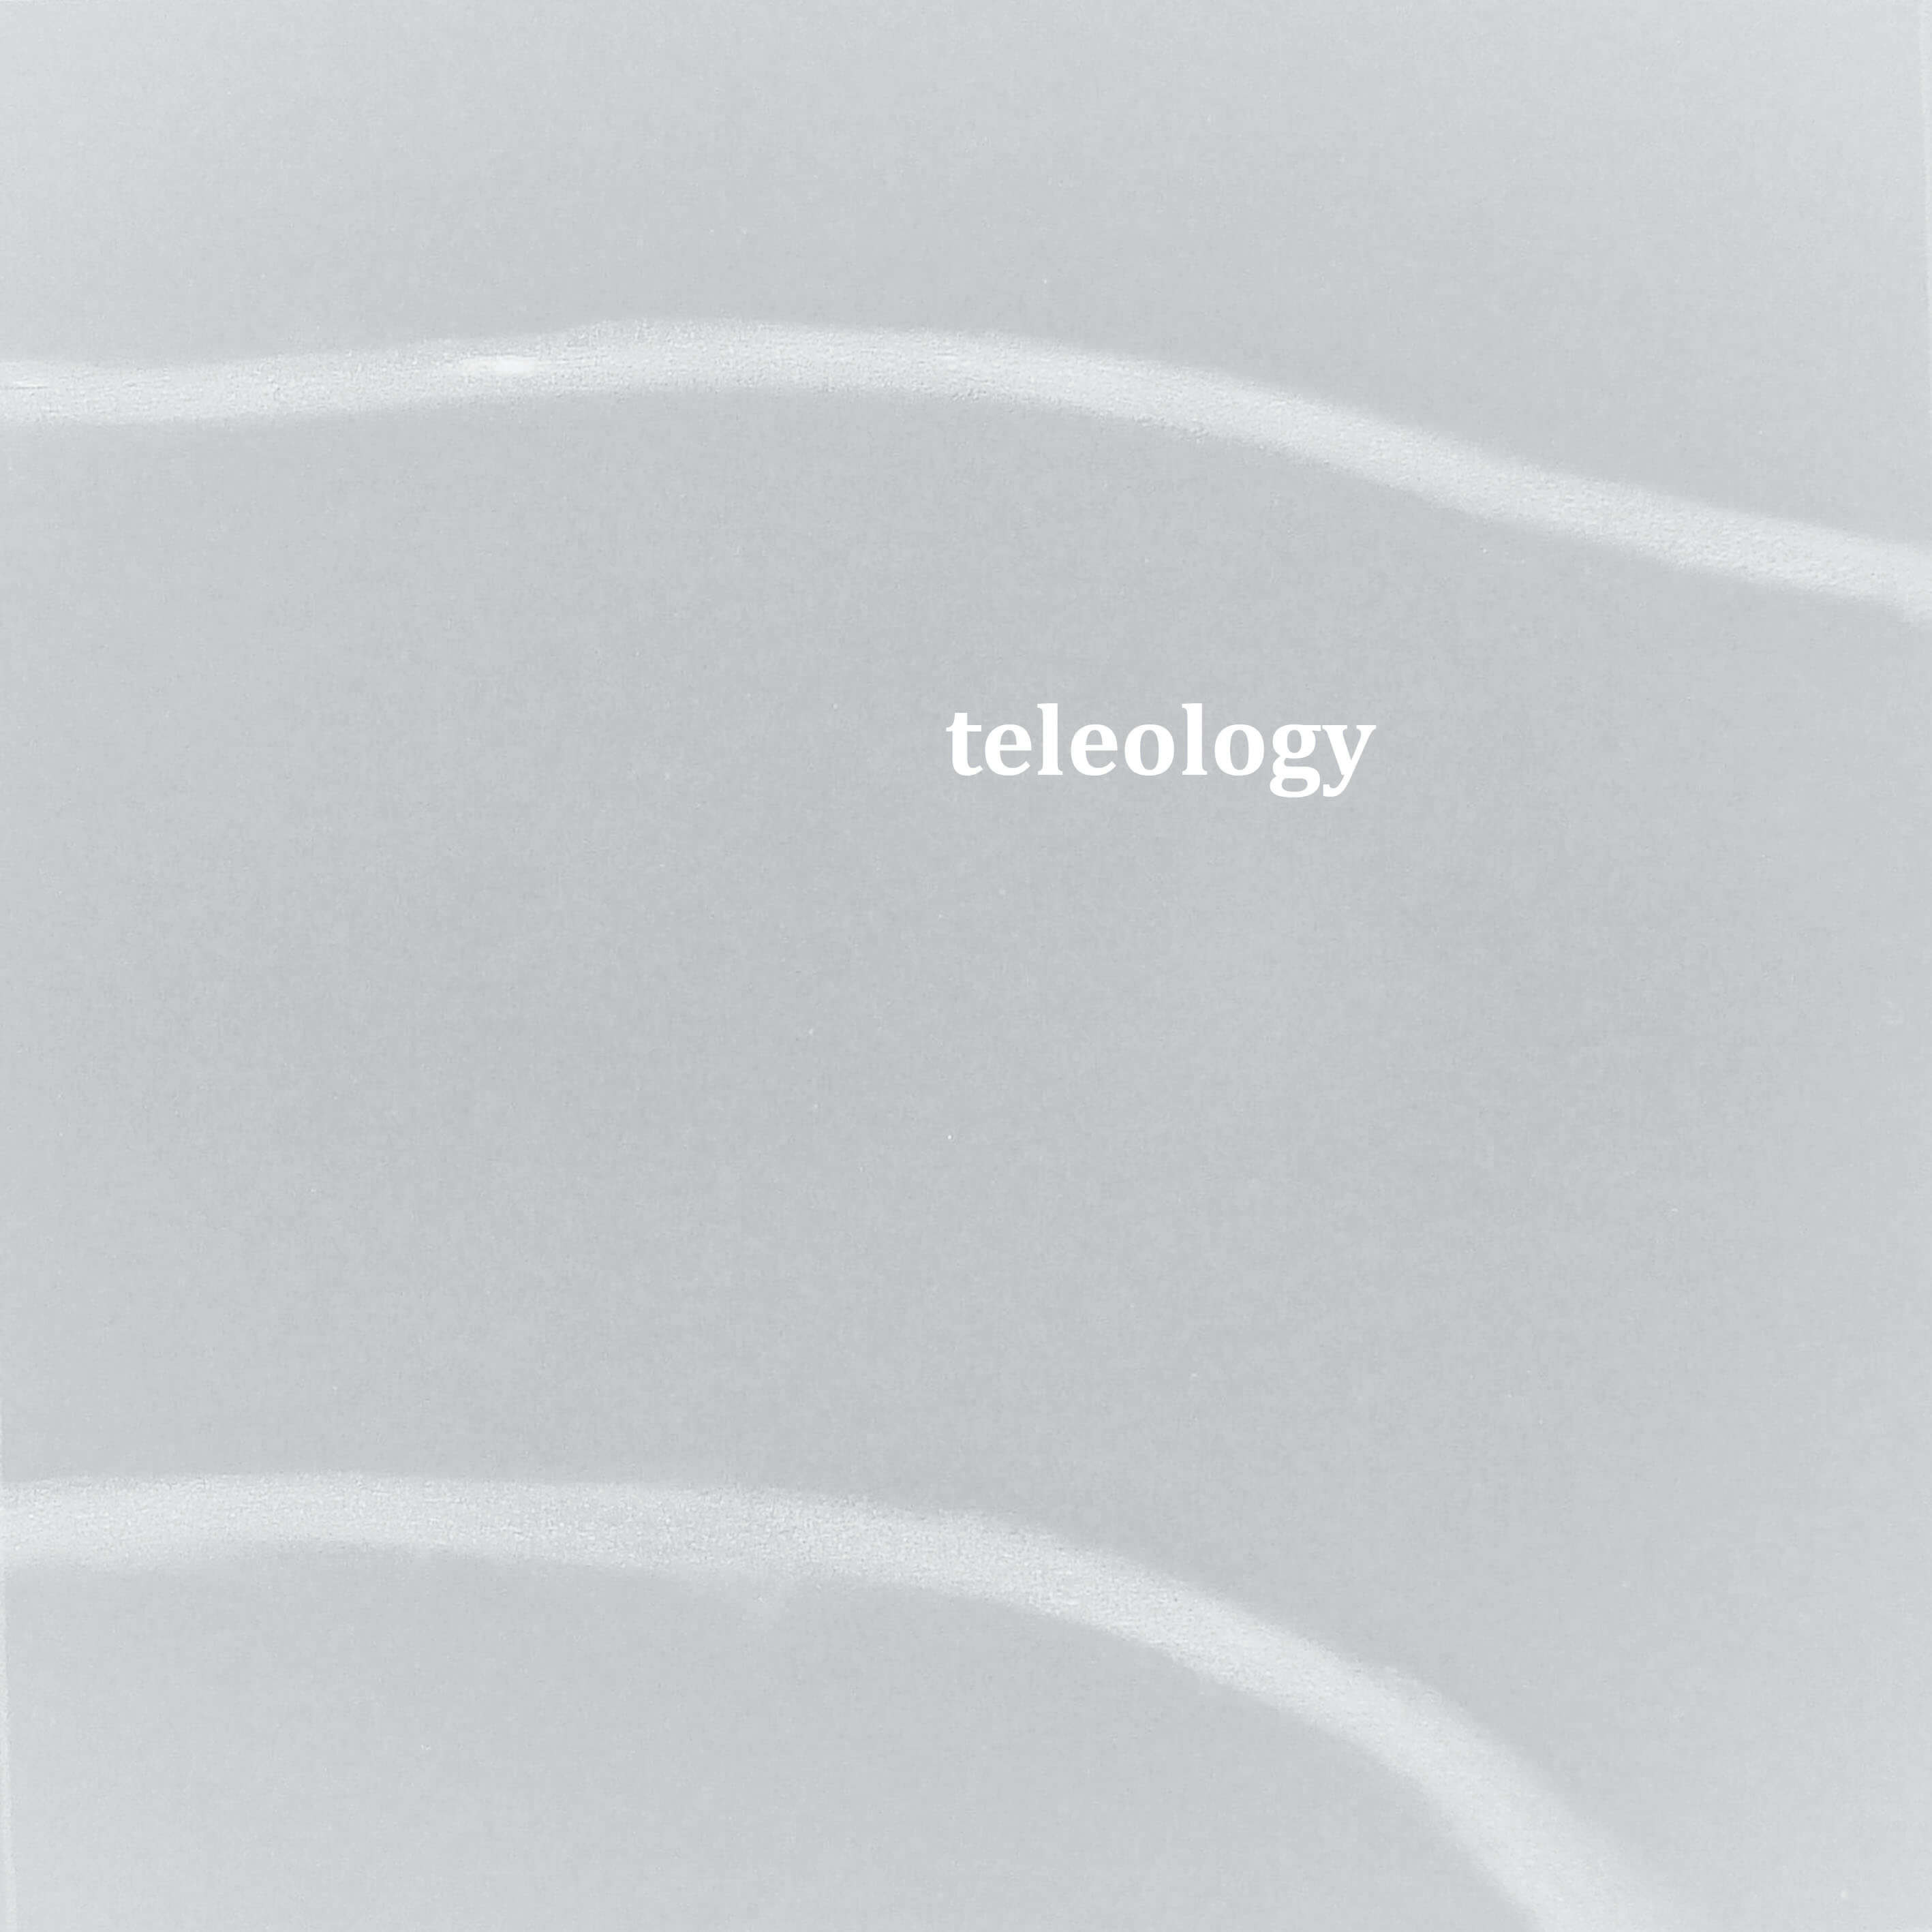 rachela abbate 07_-teleology-x-stampa the truth of virtuality  